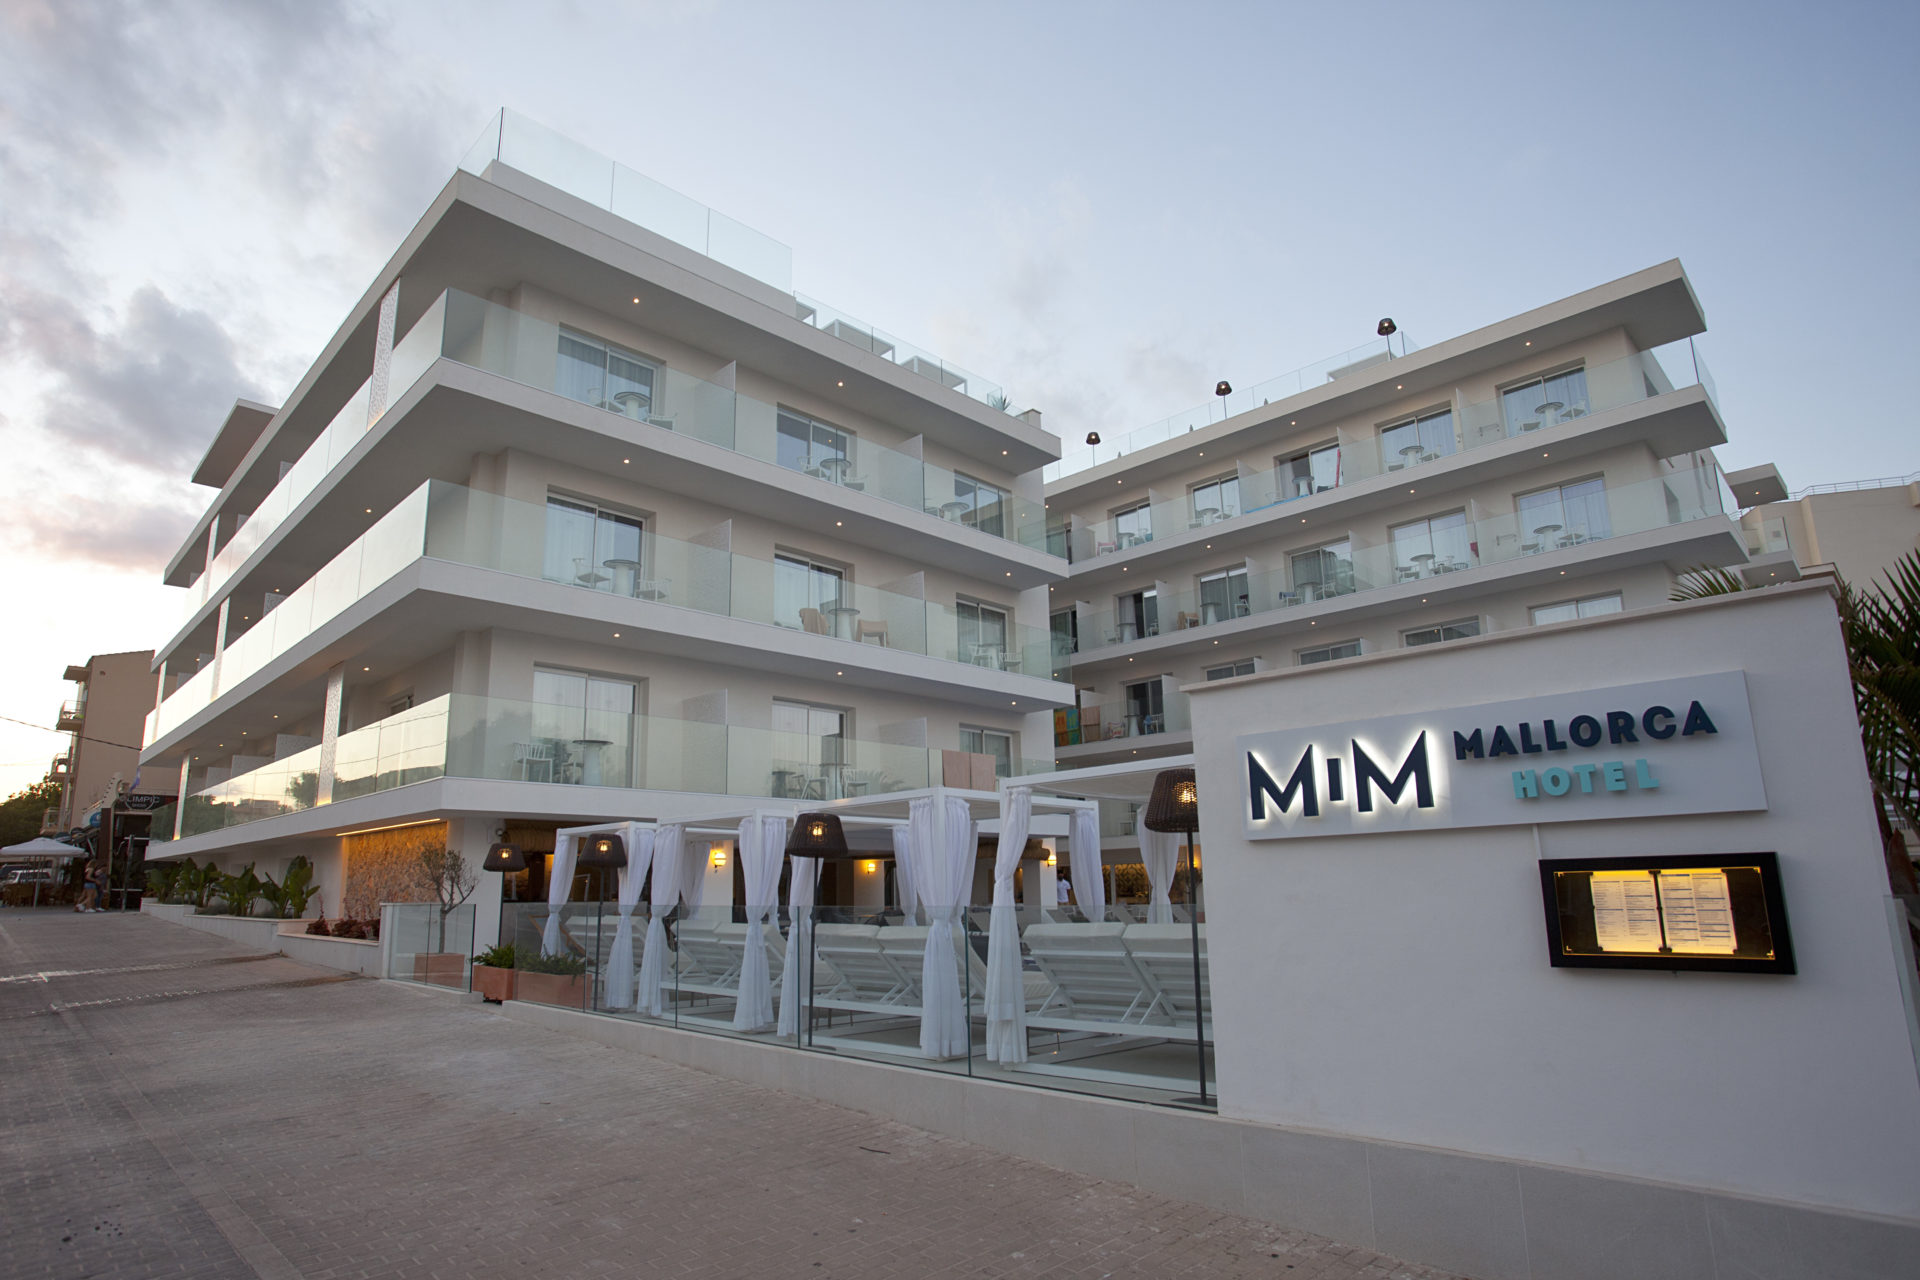 Hotel MIM Mallorca low